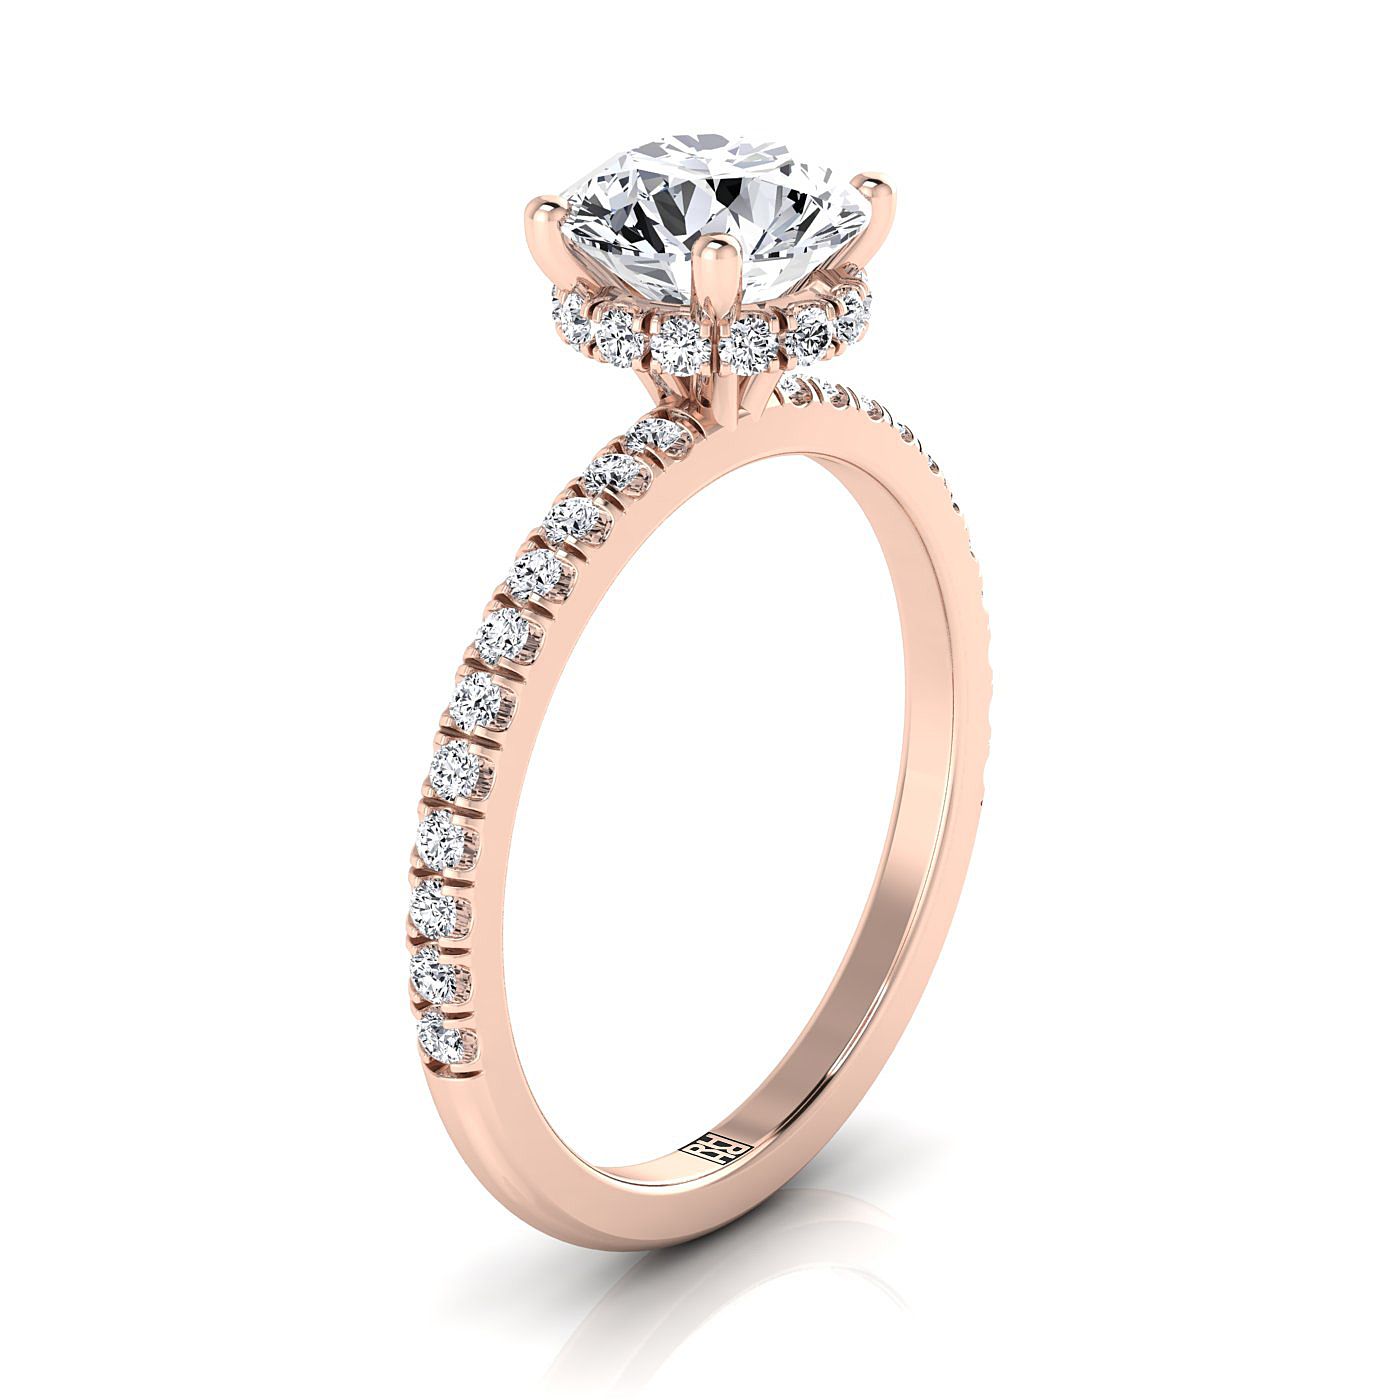 14K Rose Gold Round Brilliant Garnet Secret Diamond Halo French Pave Solitaire Engagement Ring -1/3ctw